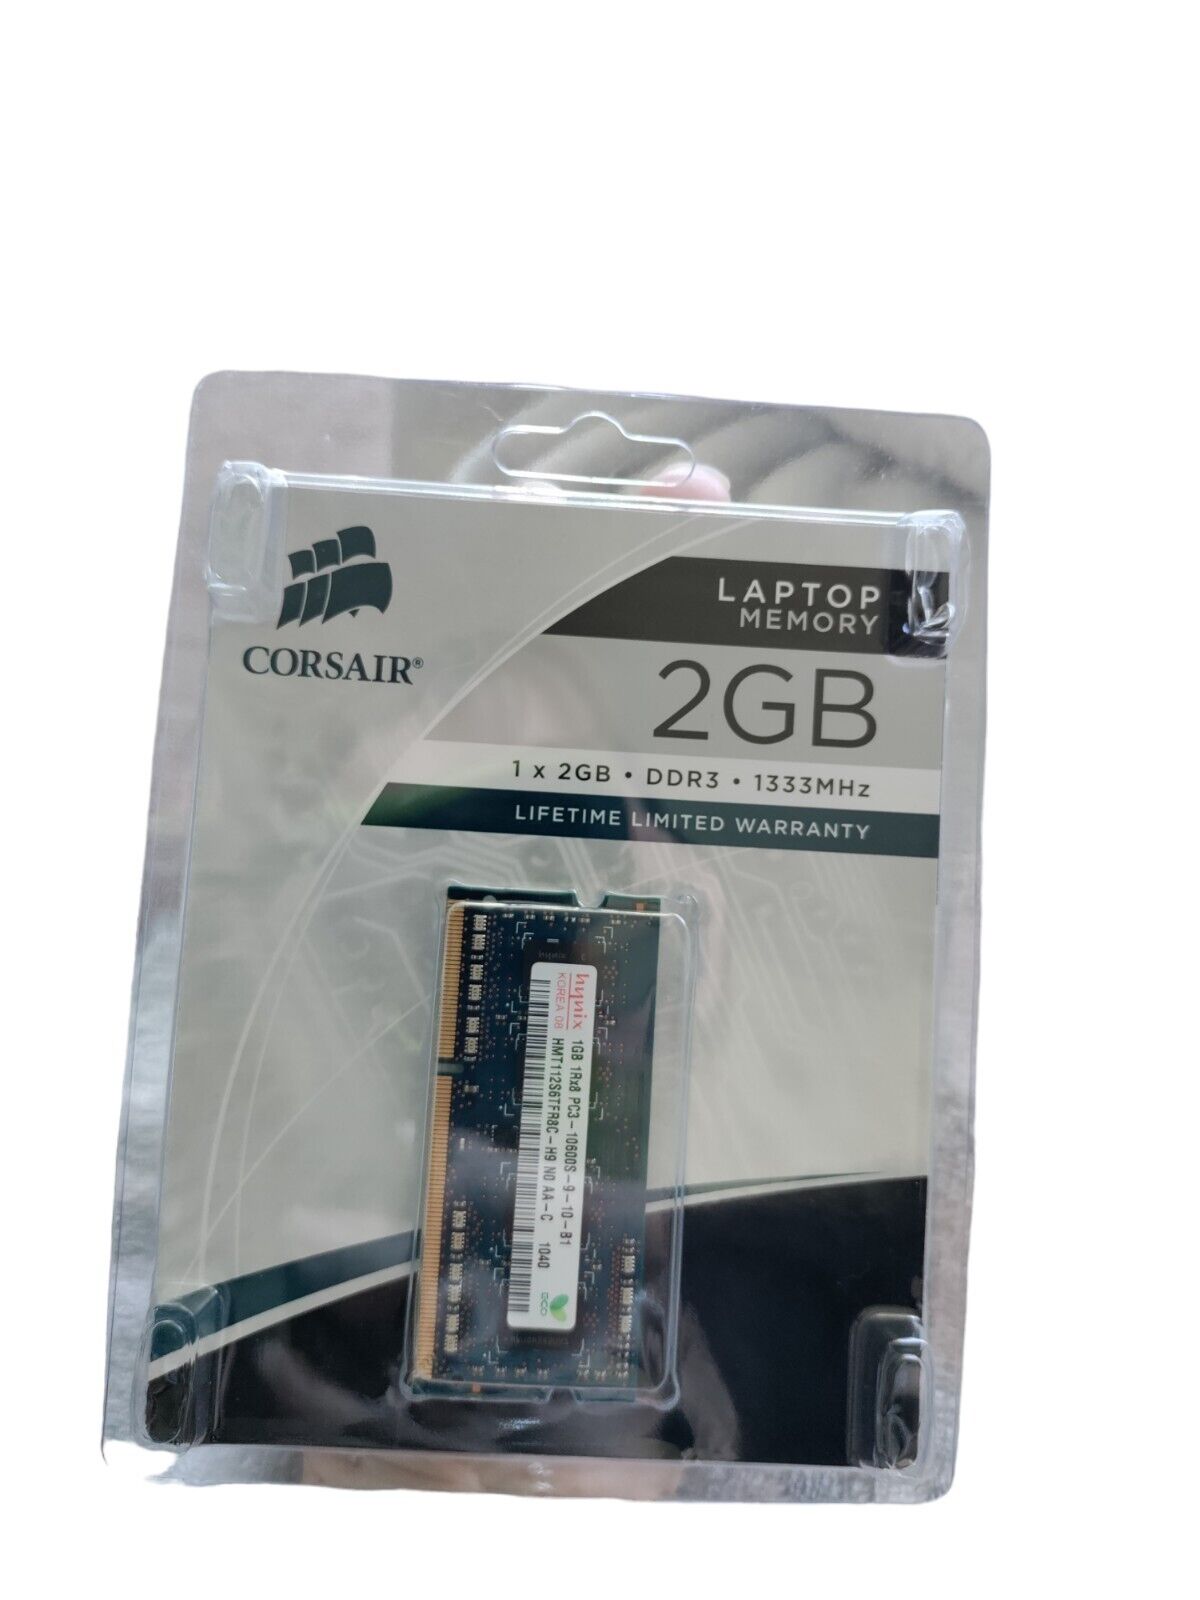 Corsair 2GB DDR3 1333MHZ Laptop Memory 2009 1x2GB New